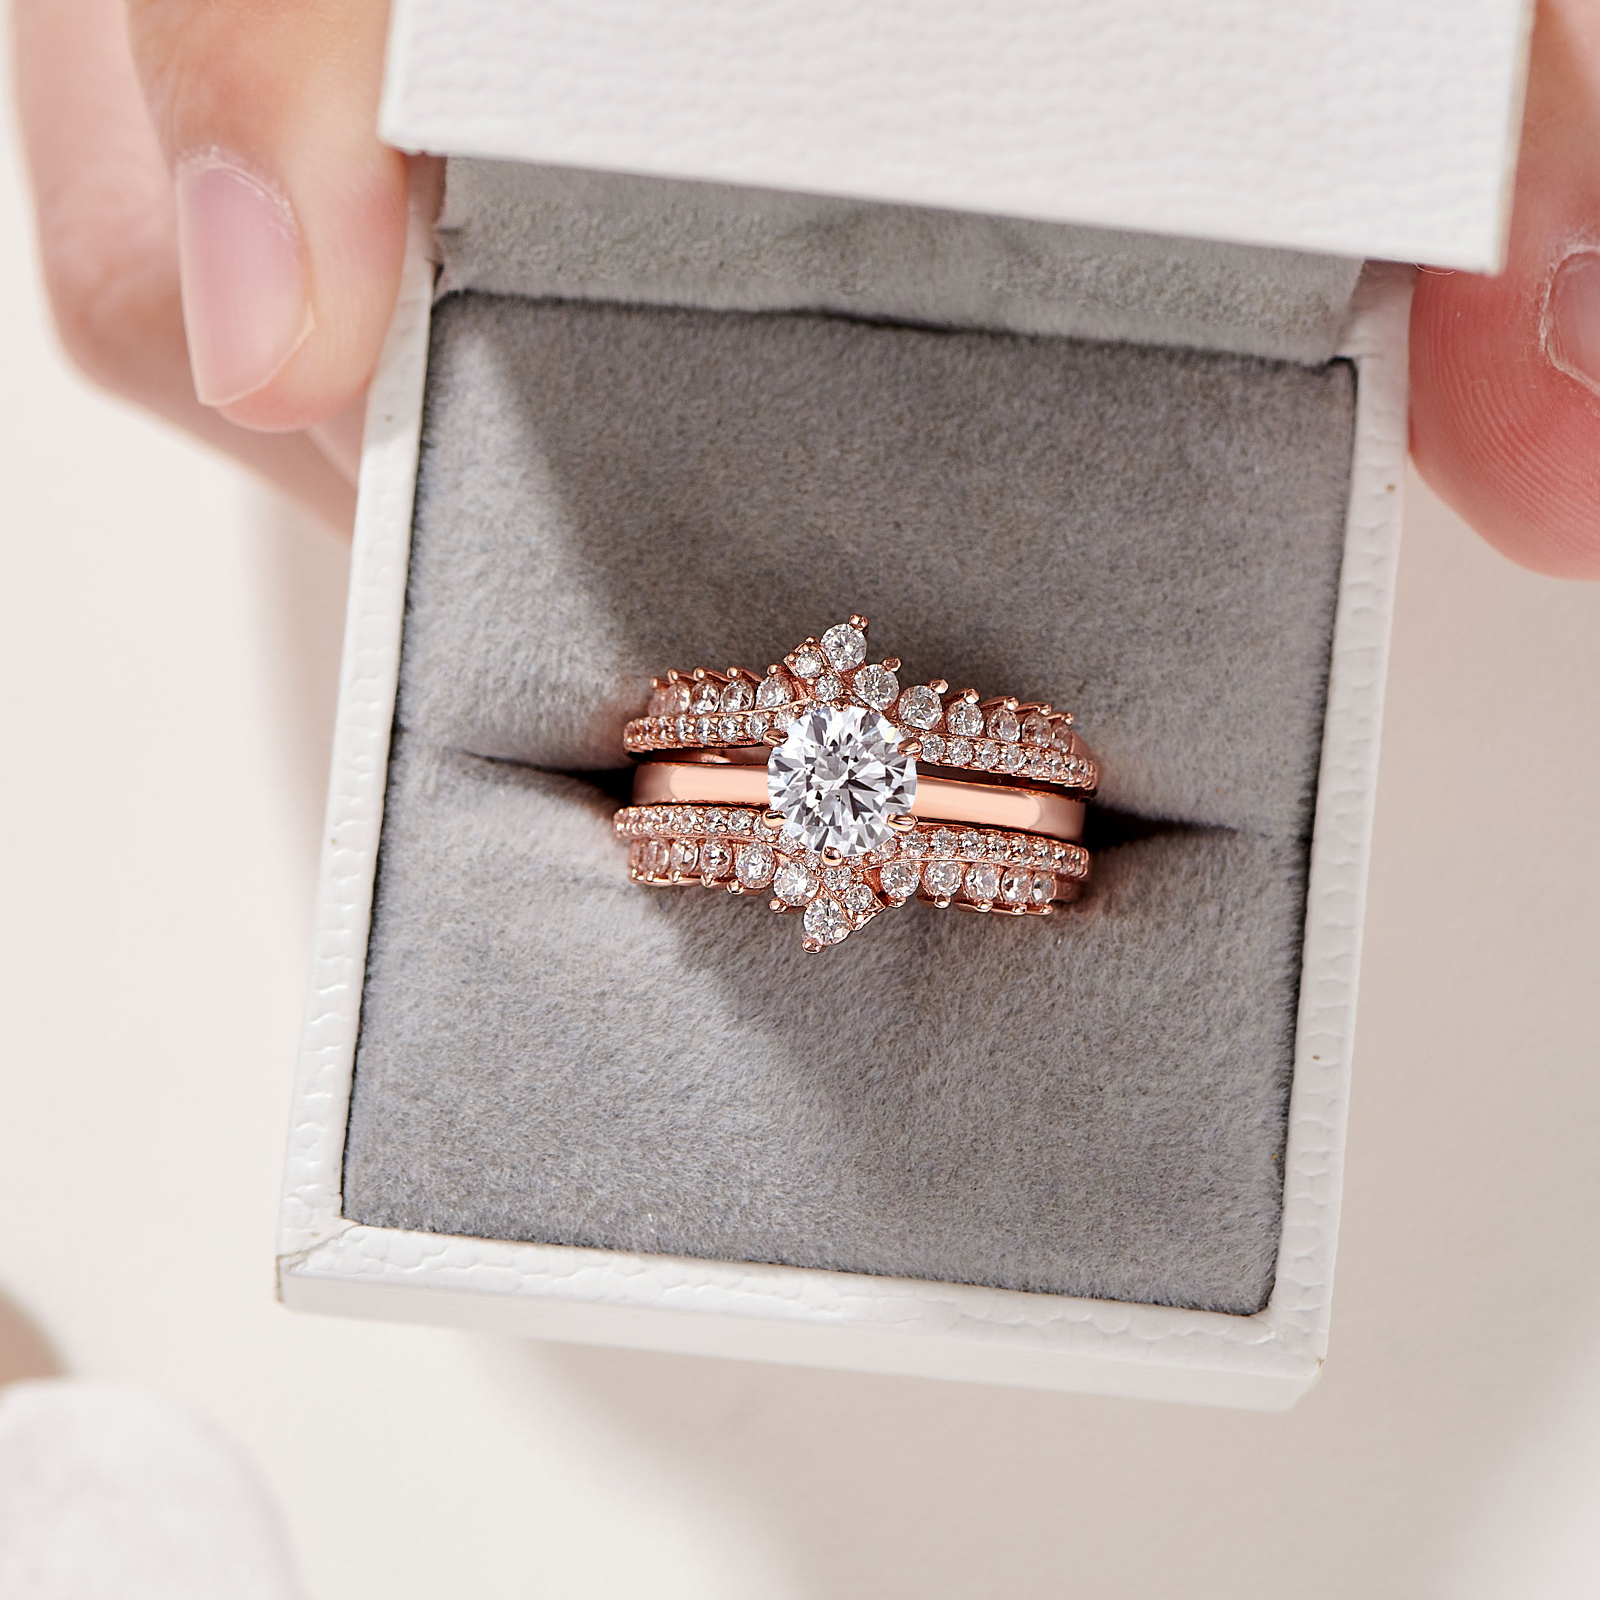 Newshe Wedding Rings for Women Engagement Ring Enhancer Band Bridal Set Sterling Silver 1.8Ct Cz Rose Gold Size 7.5 - image 3 of 7